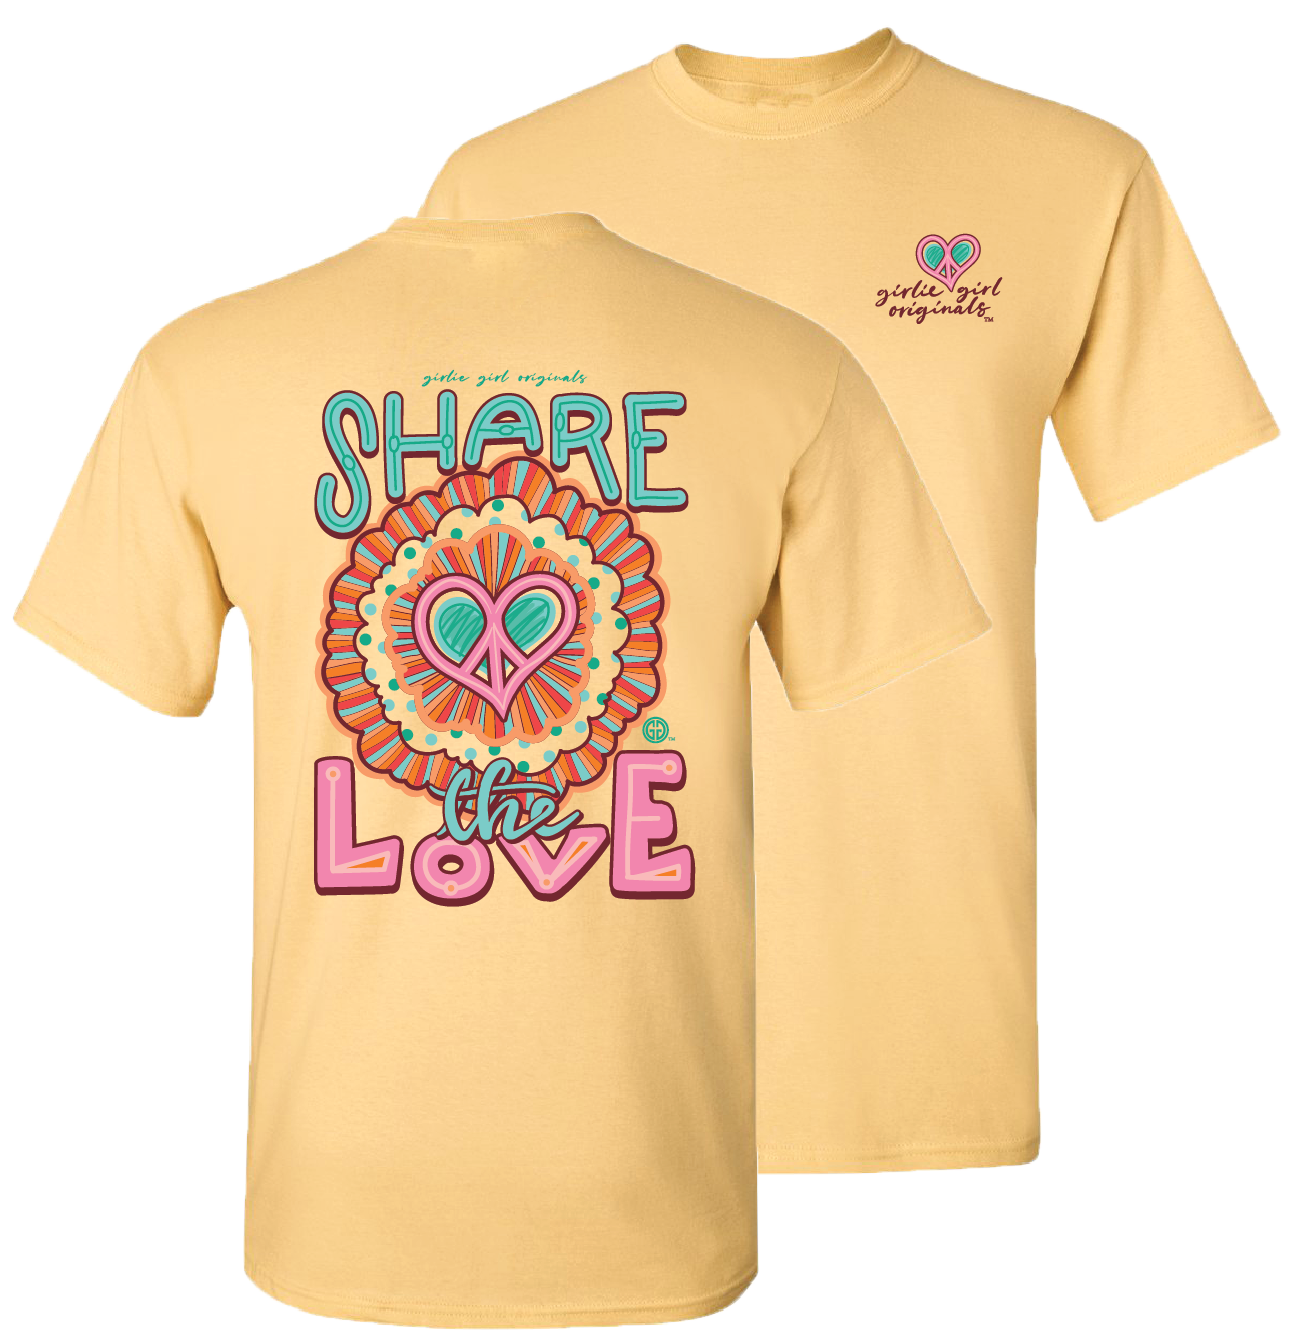 Share the Love Yellow Haze SS-2496